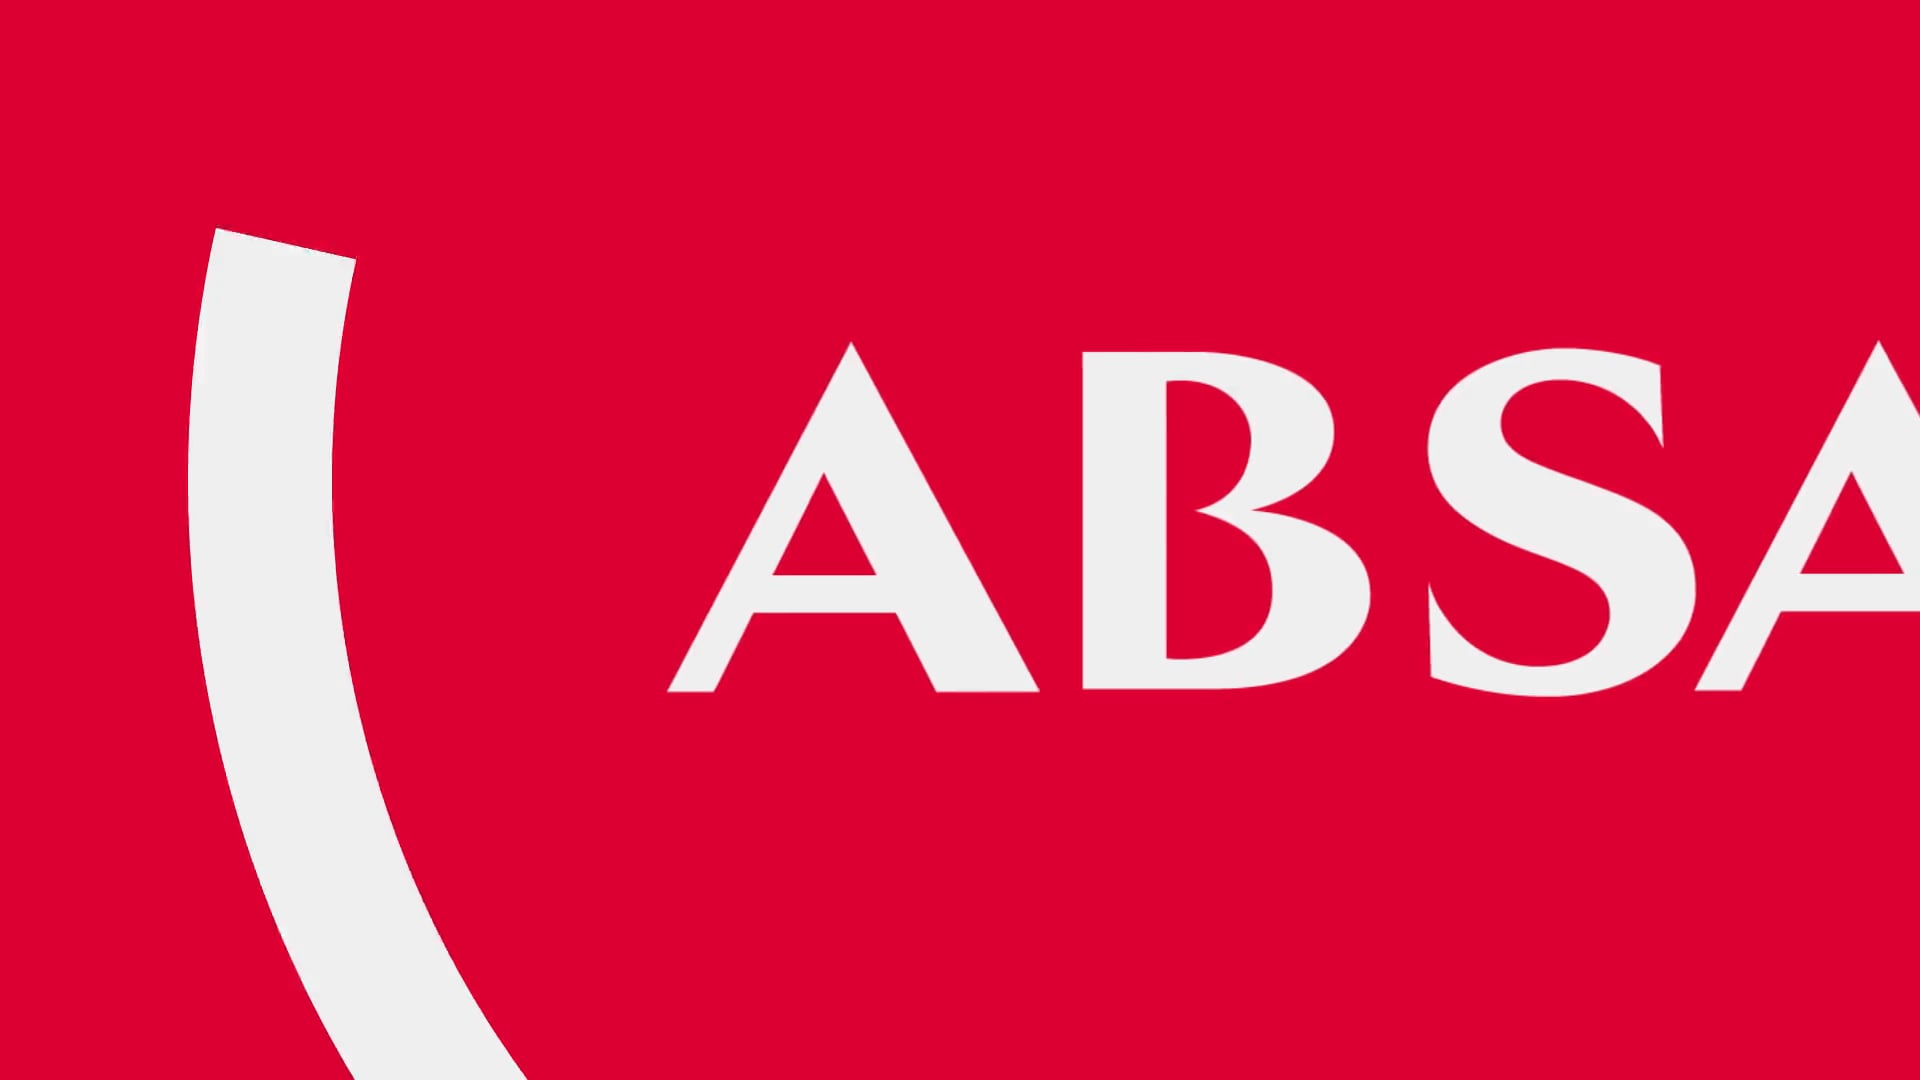 Absa - Sonic Branding